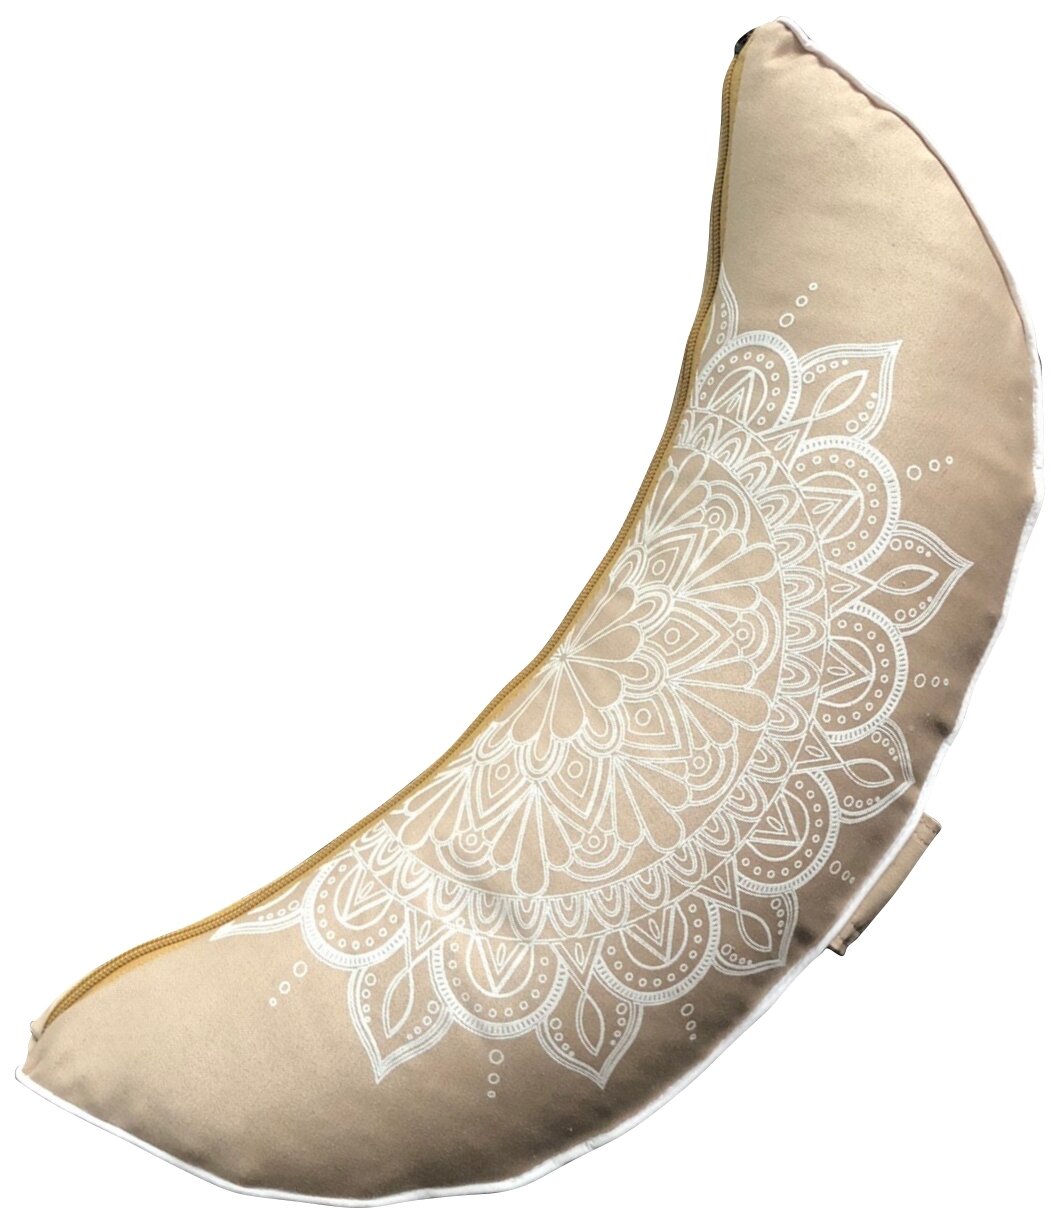 Подушка для медитации полумесяц Мандала, бежевый, размер 38 х 15 х 9 см вес 1,2 кг состав гречишная лузга